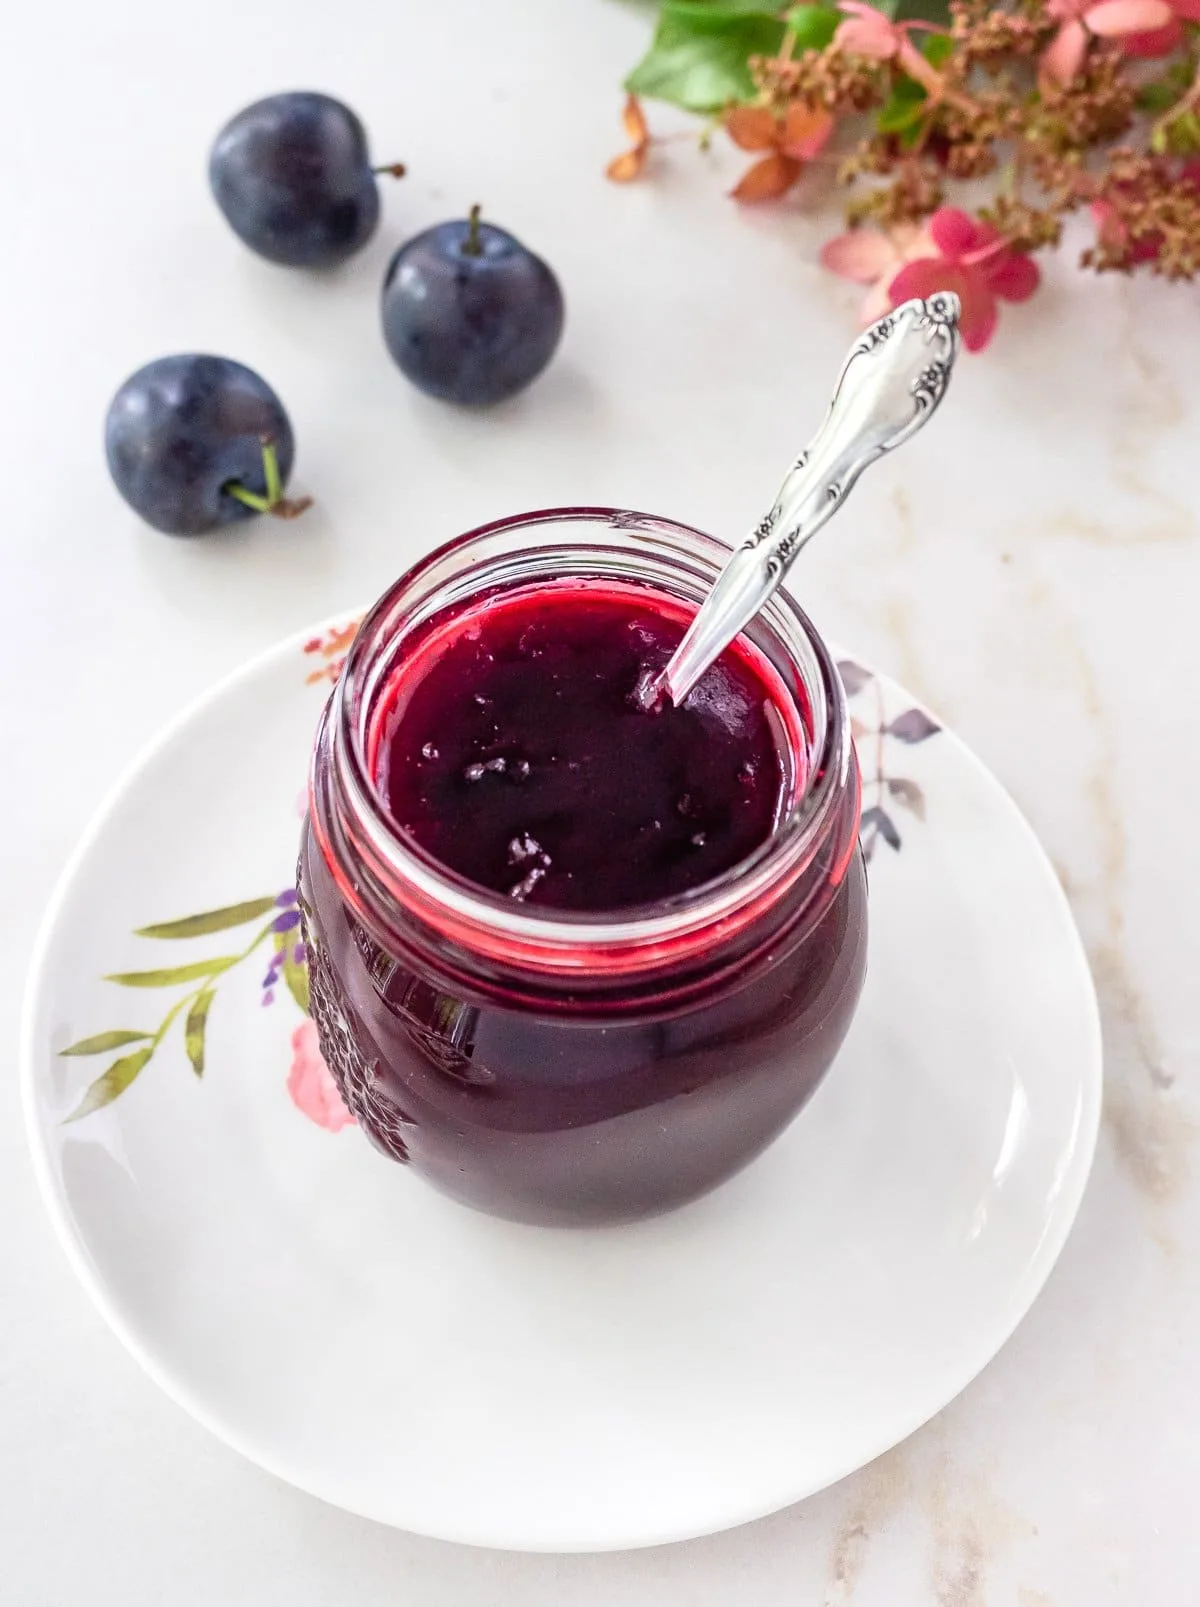 Small jar of homemade plum jam.